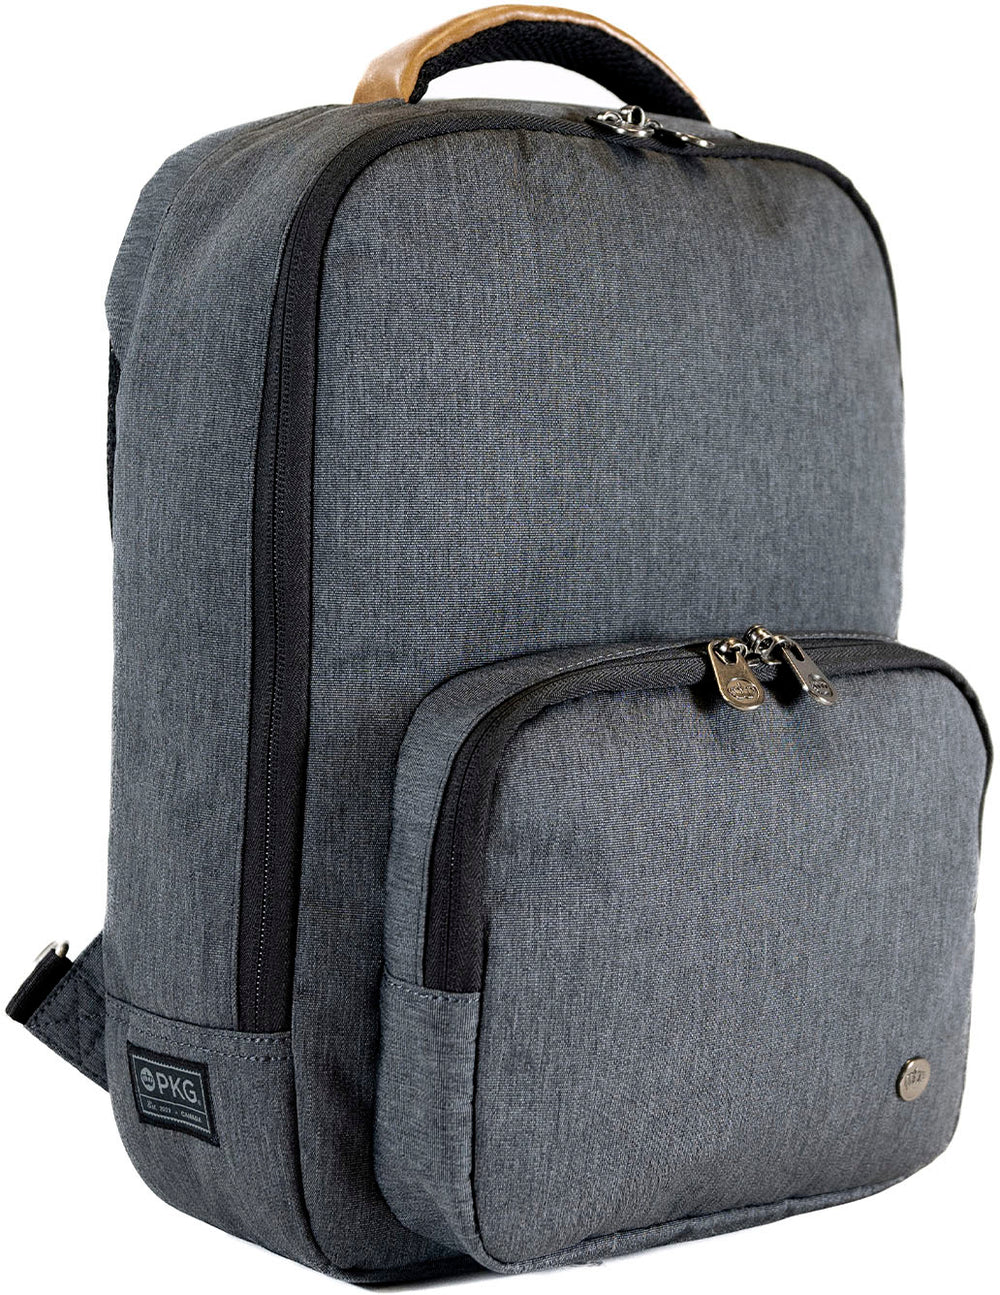 PKG - Robson 12L Recycled Crossbody Bag for 14" Laptop - Dark Grey/Tan_1